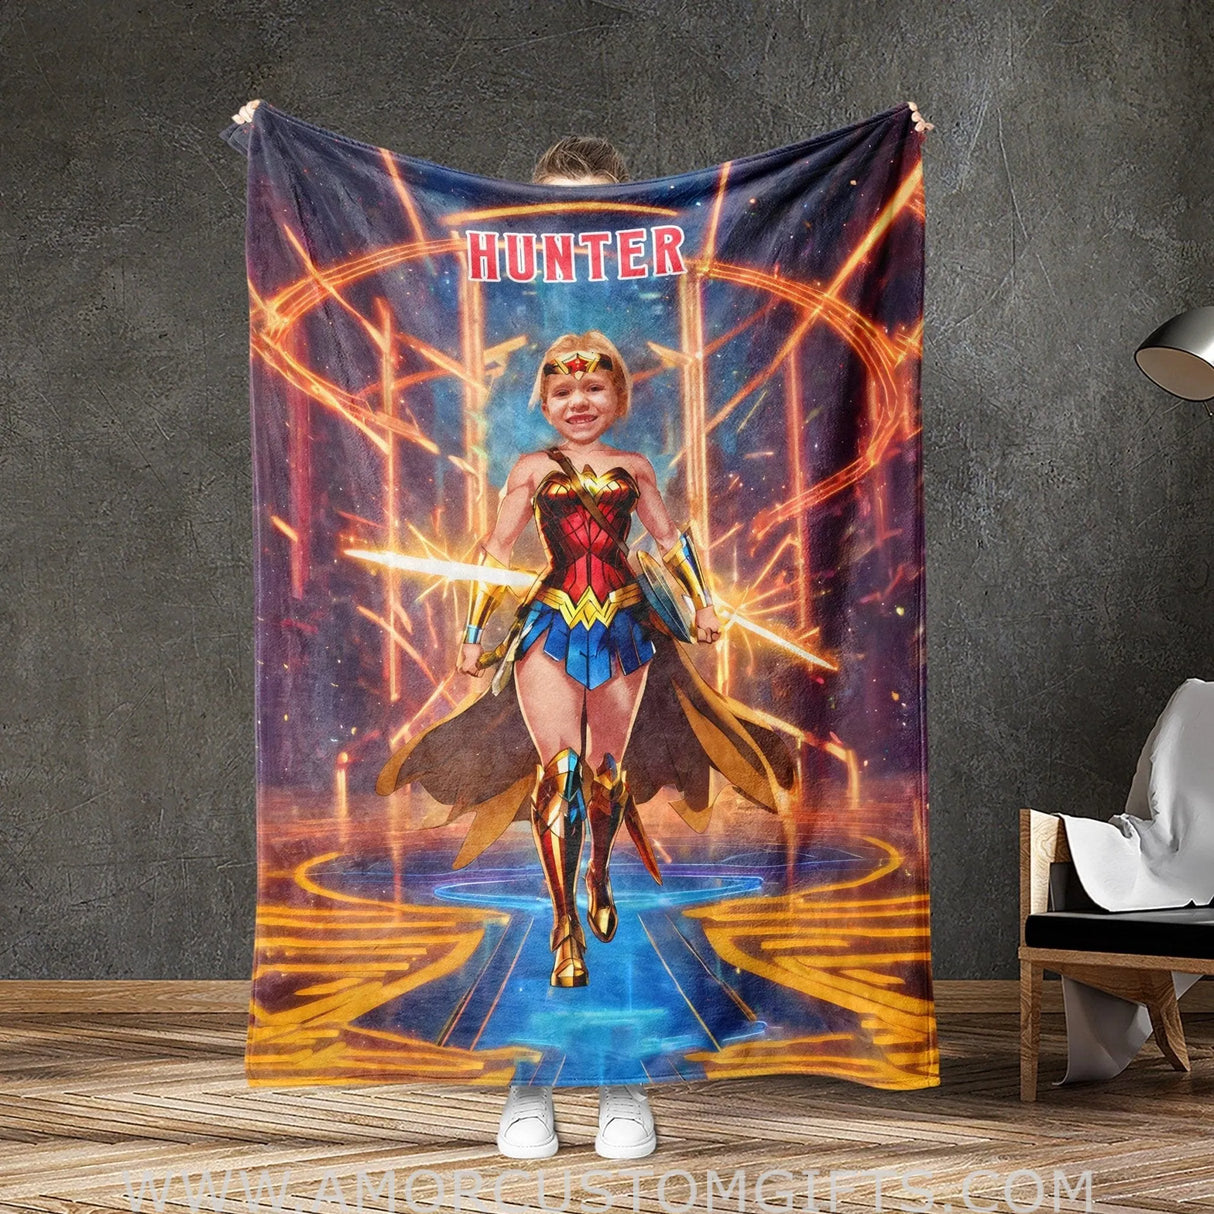 Blankets Personalized Wonder Woman Superhero Photo Blanket | Customized Superhero Wonder Girl Blanket